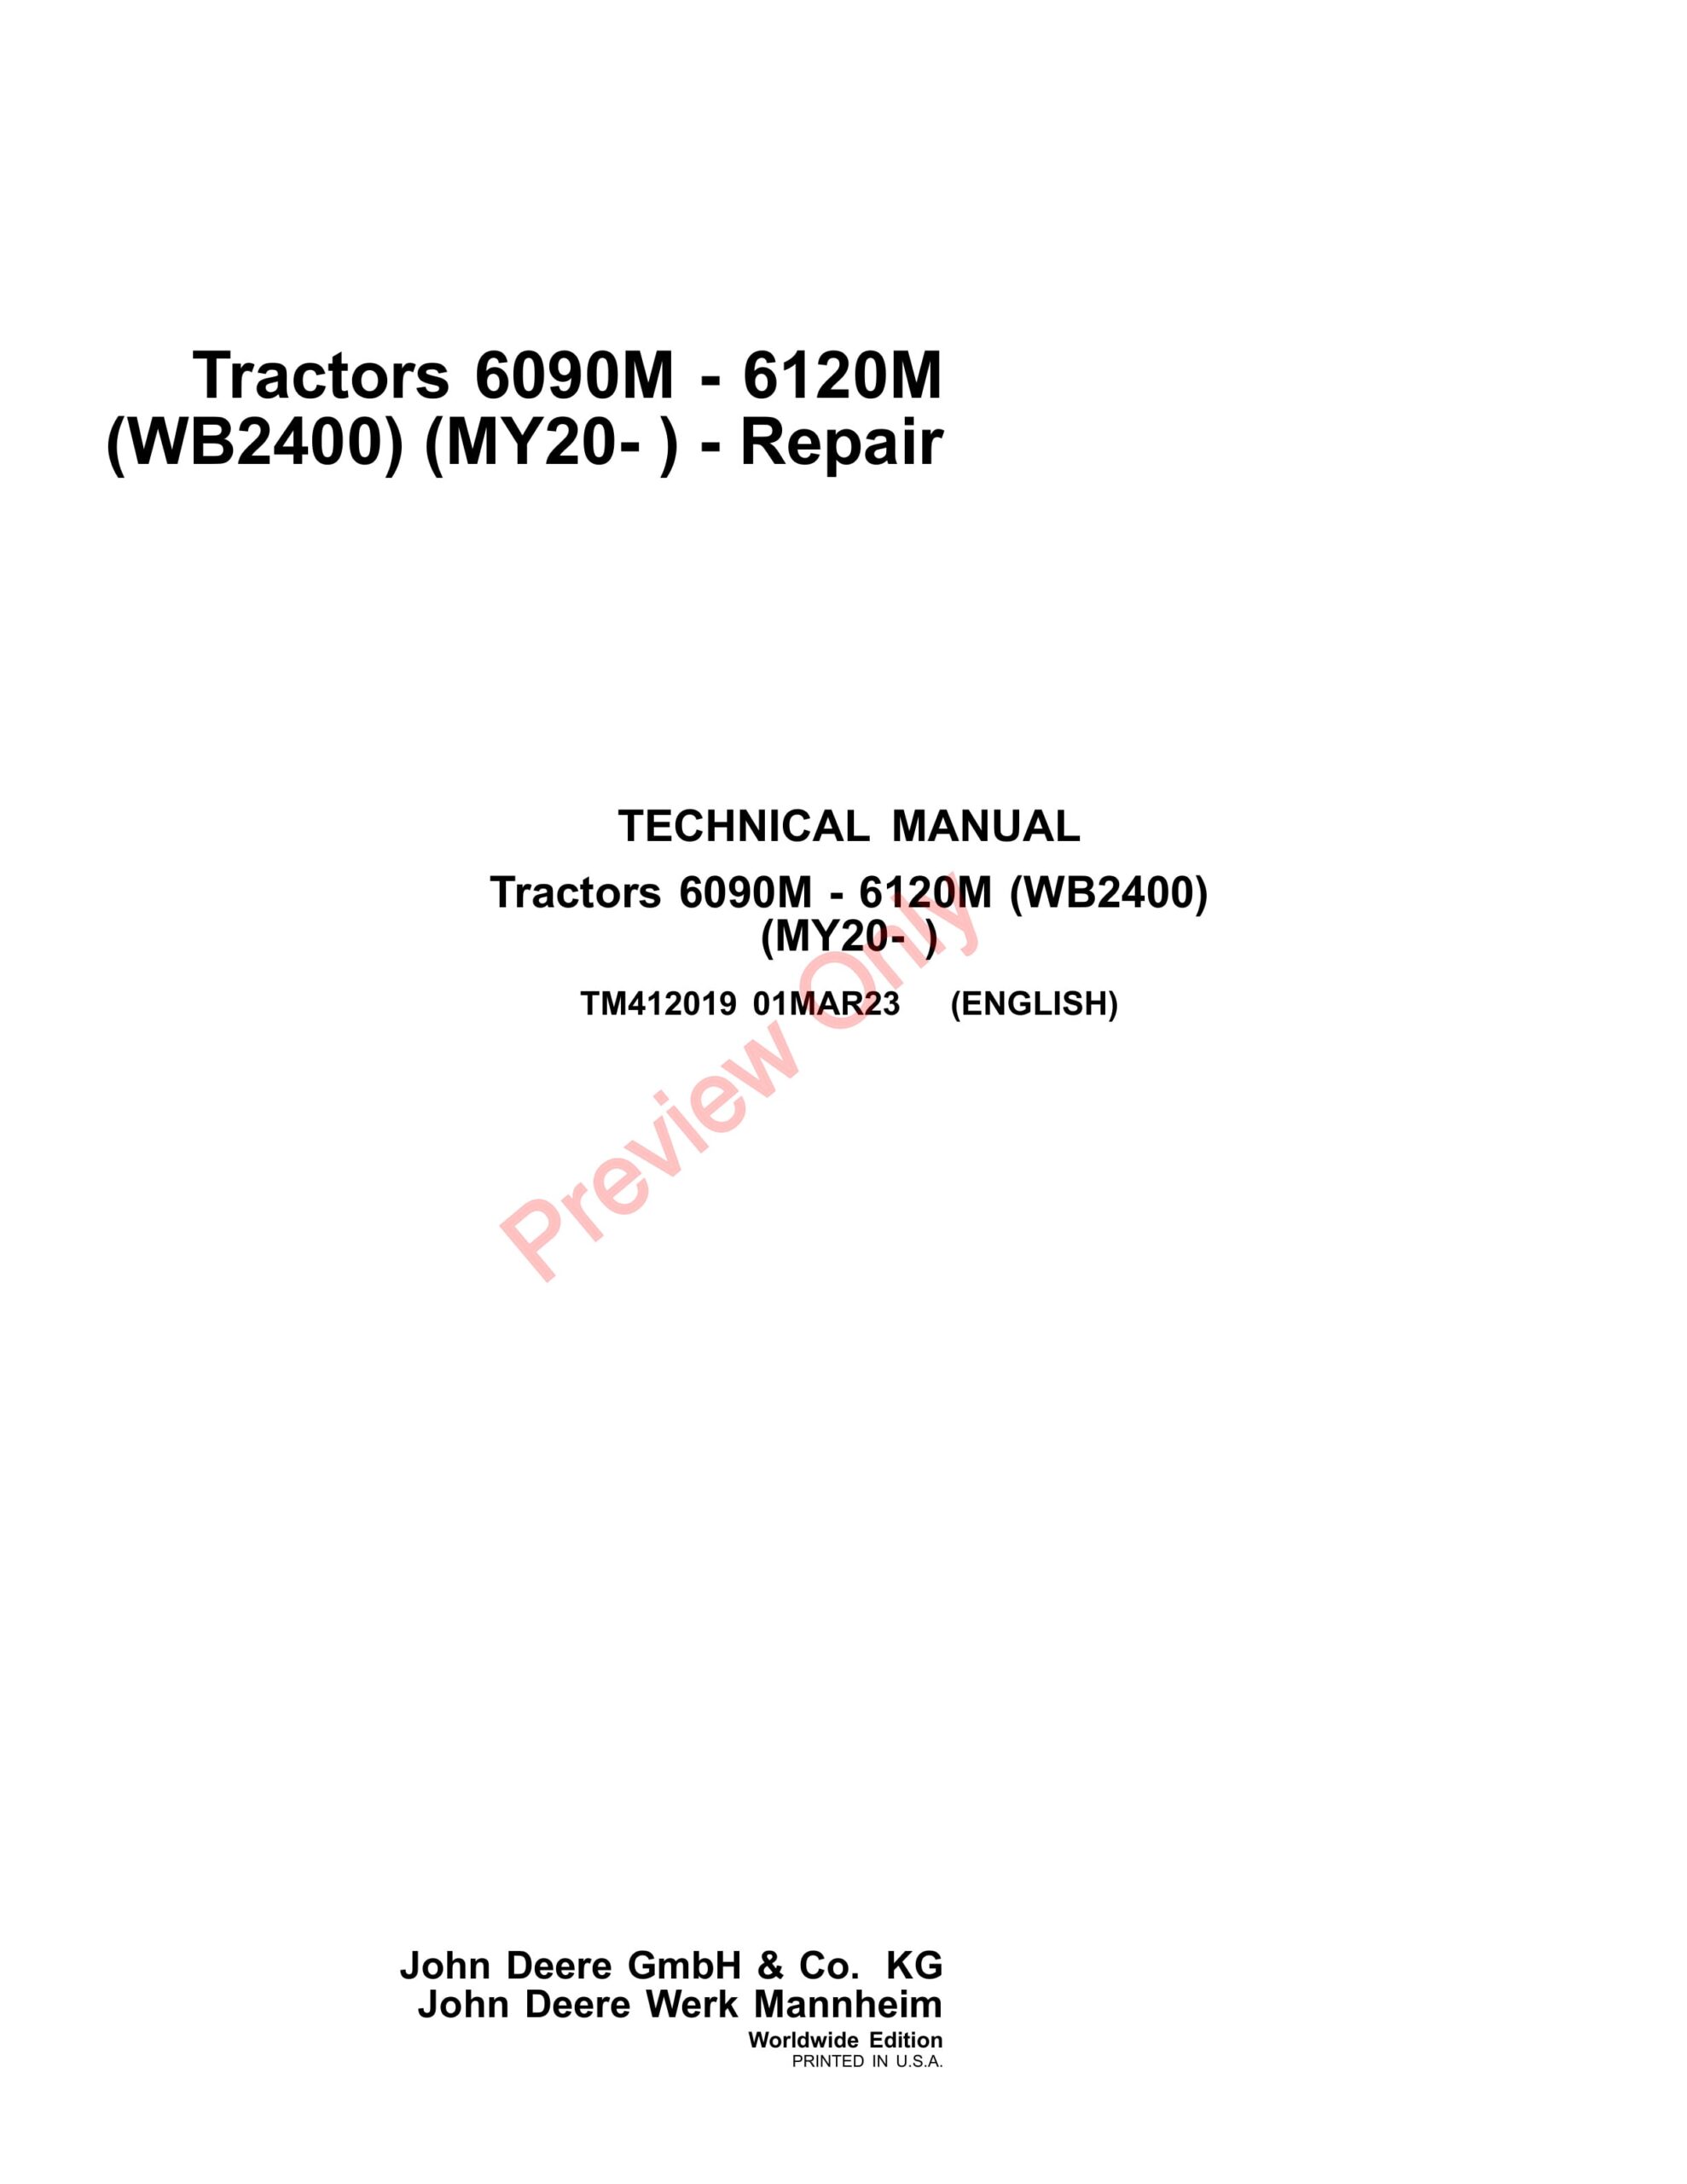 John Deere Tractors 6090M – 6120M (WB2400) (MY20- ) Technical Manual TM412019 01MAR23-1